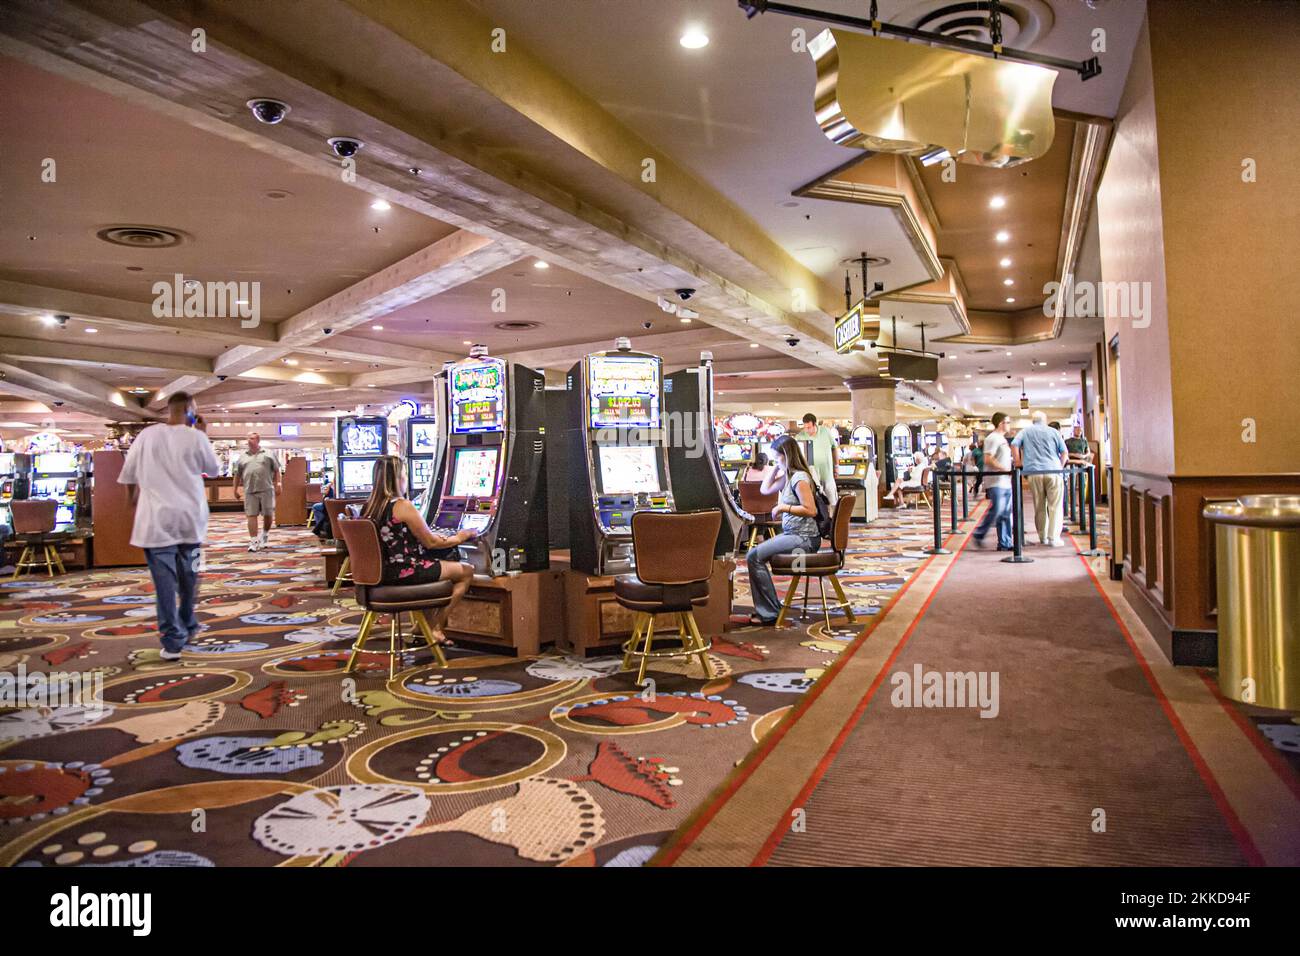 Registration Desk at the Paris Hotel in Las Vegas Editorial Stock Image -  Image of casino, people: 38078964